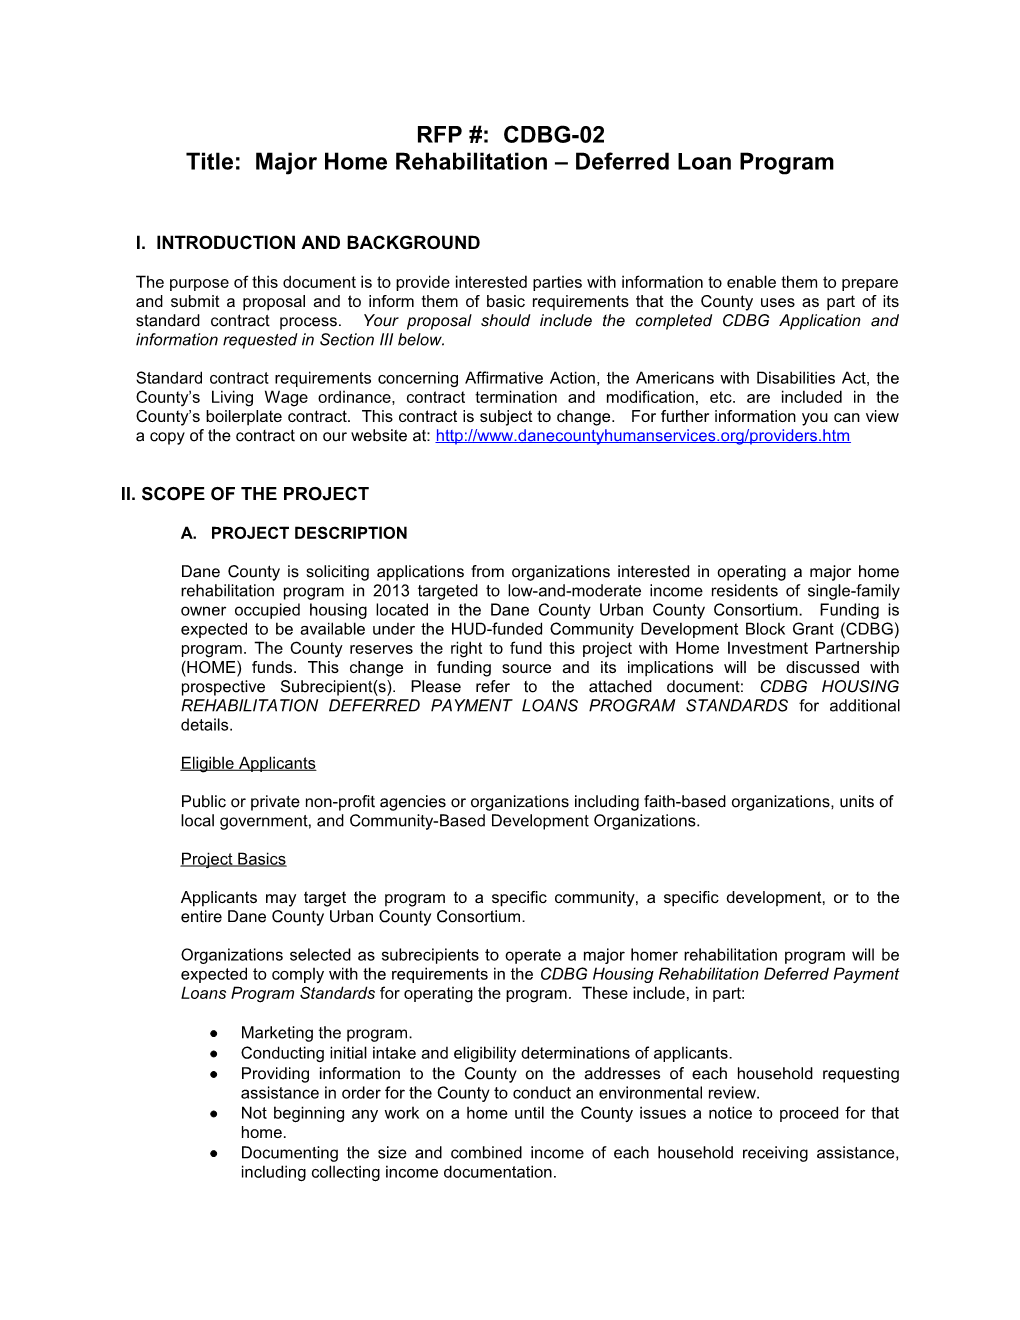 Title: Major Home Rehabilitation Deferred Loan Program